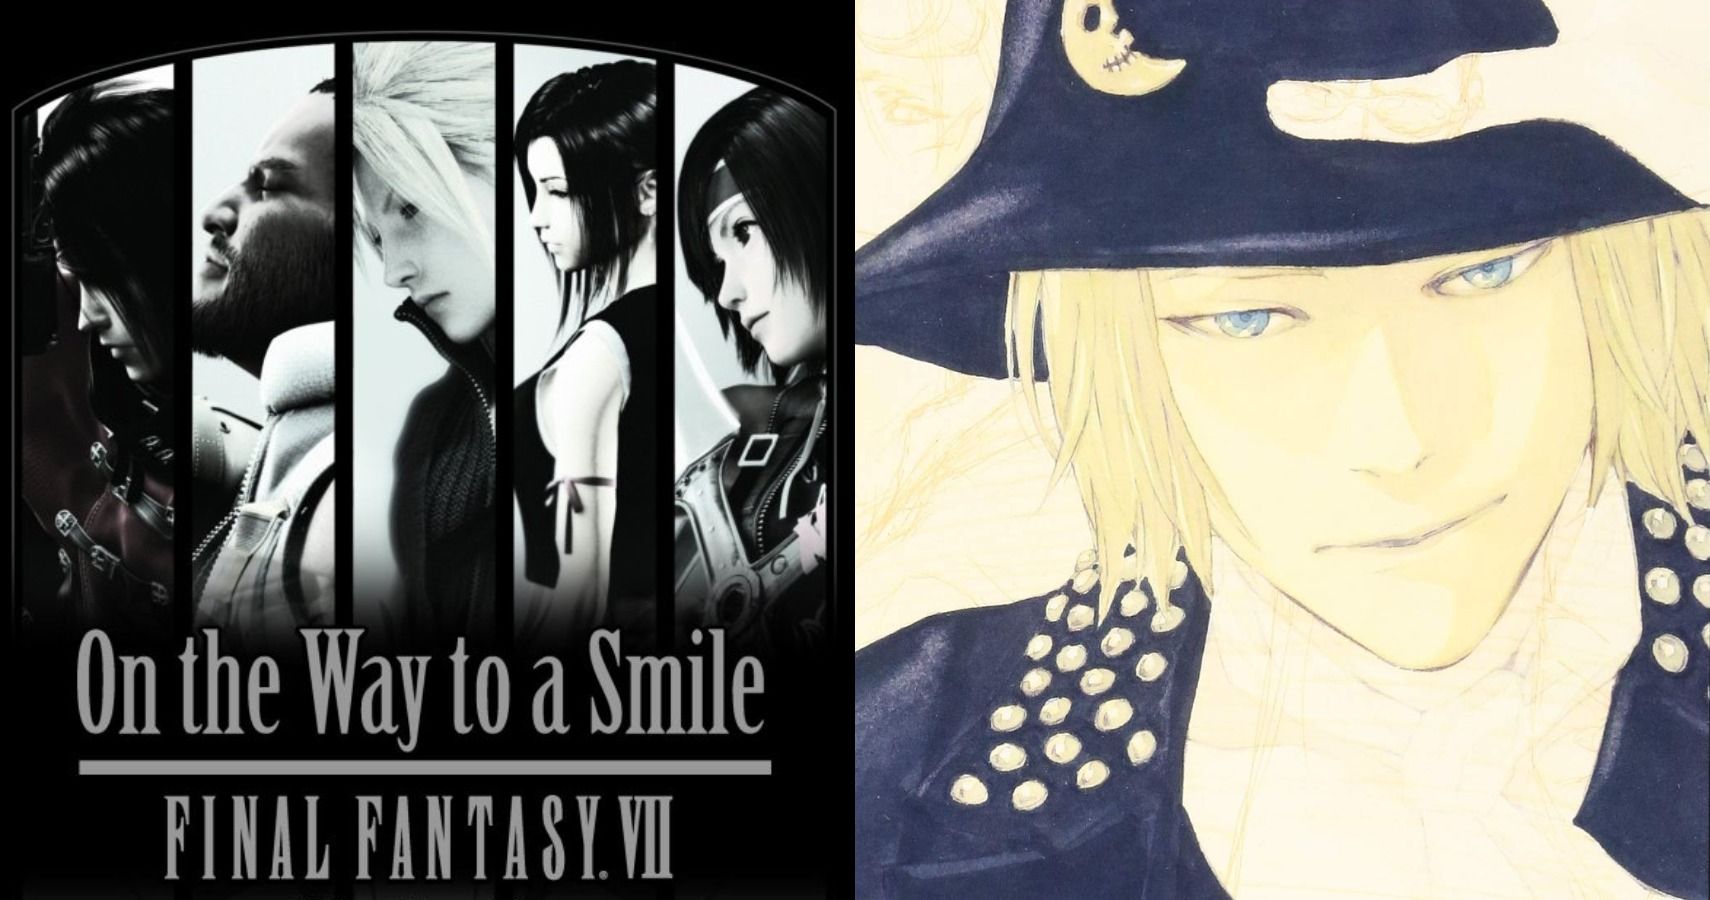 Final Fantasy VII Book Cover